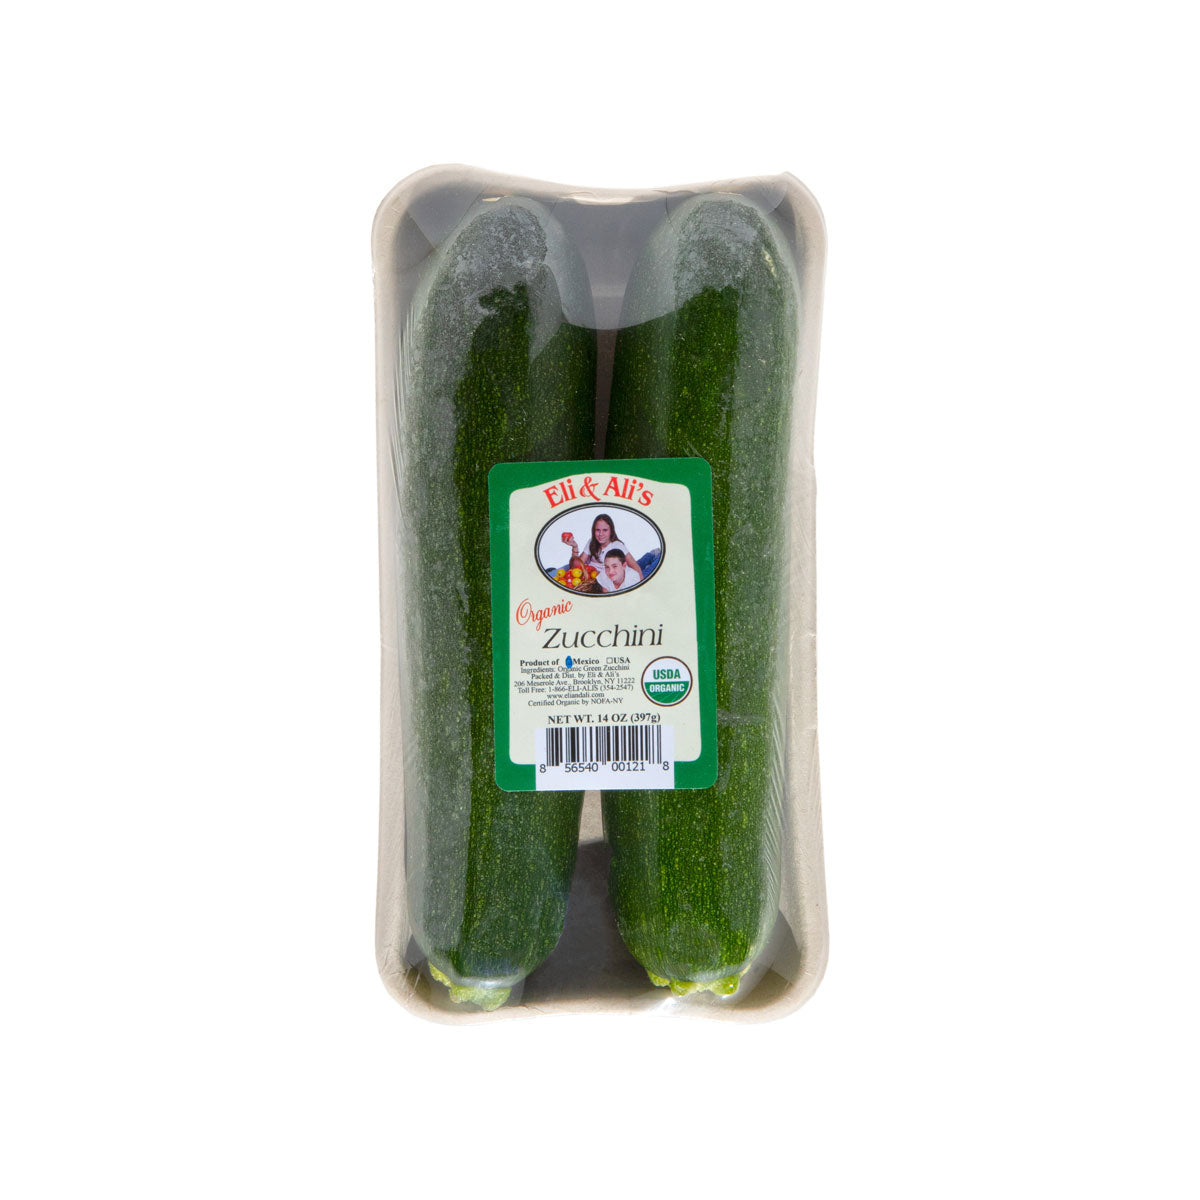 Eli & Ali'S Organic Zucchini 2 Pack 14 OZ